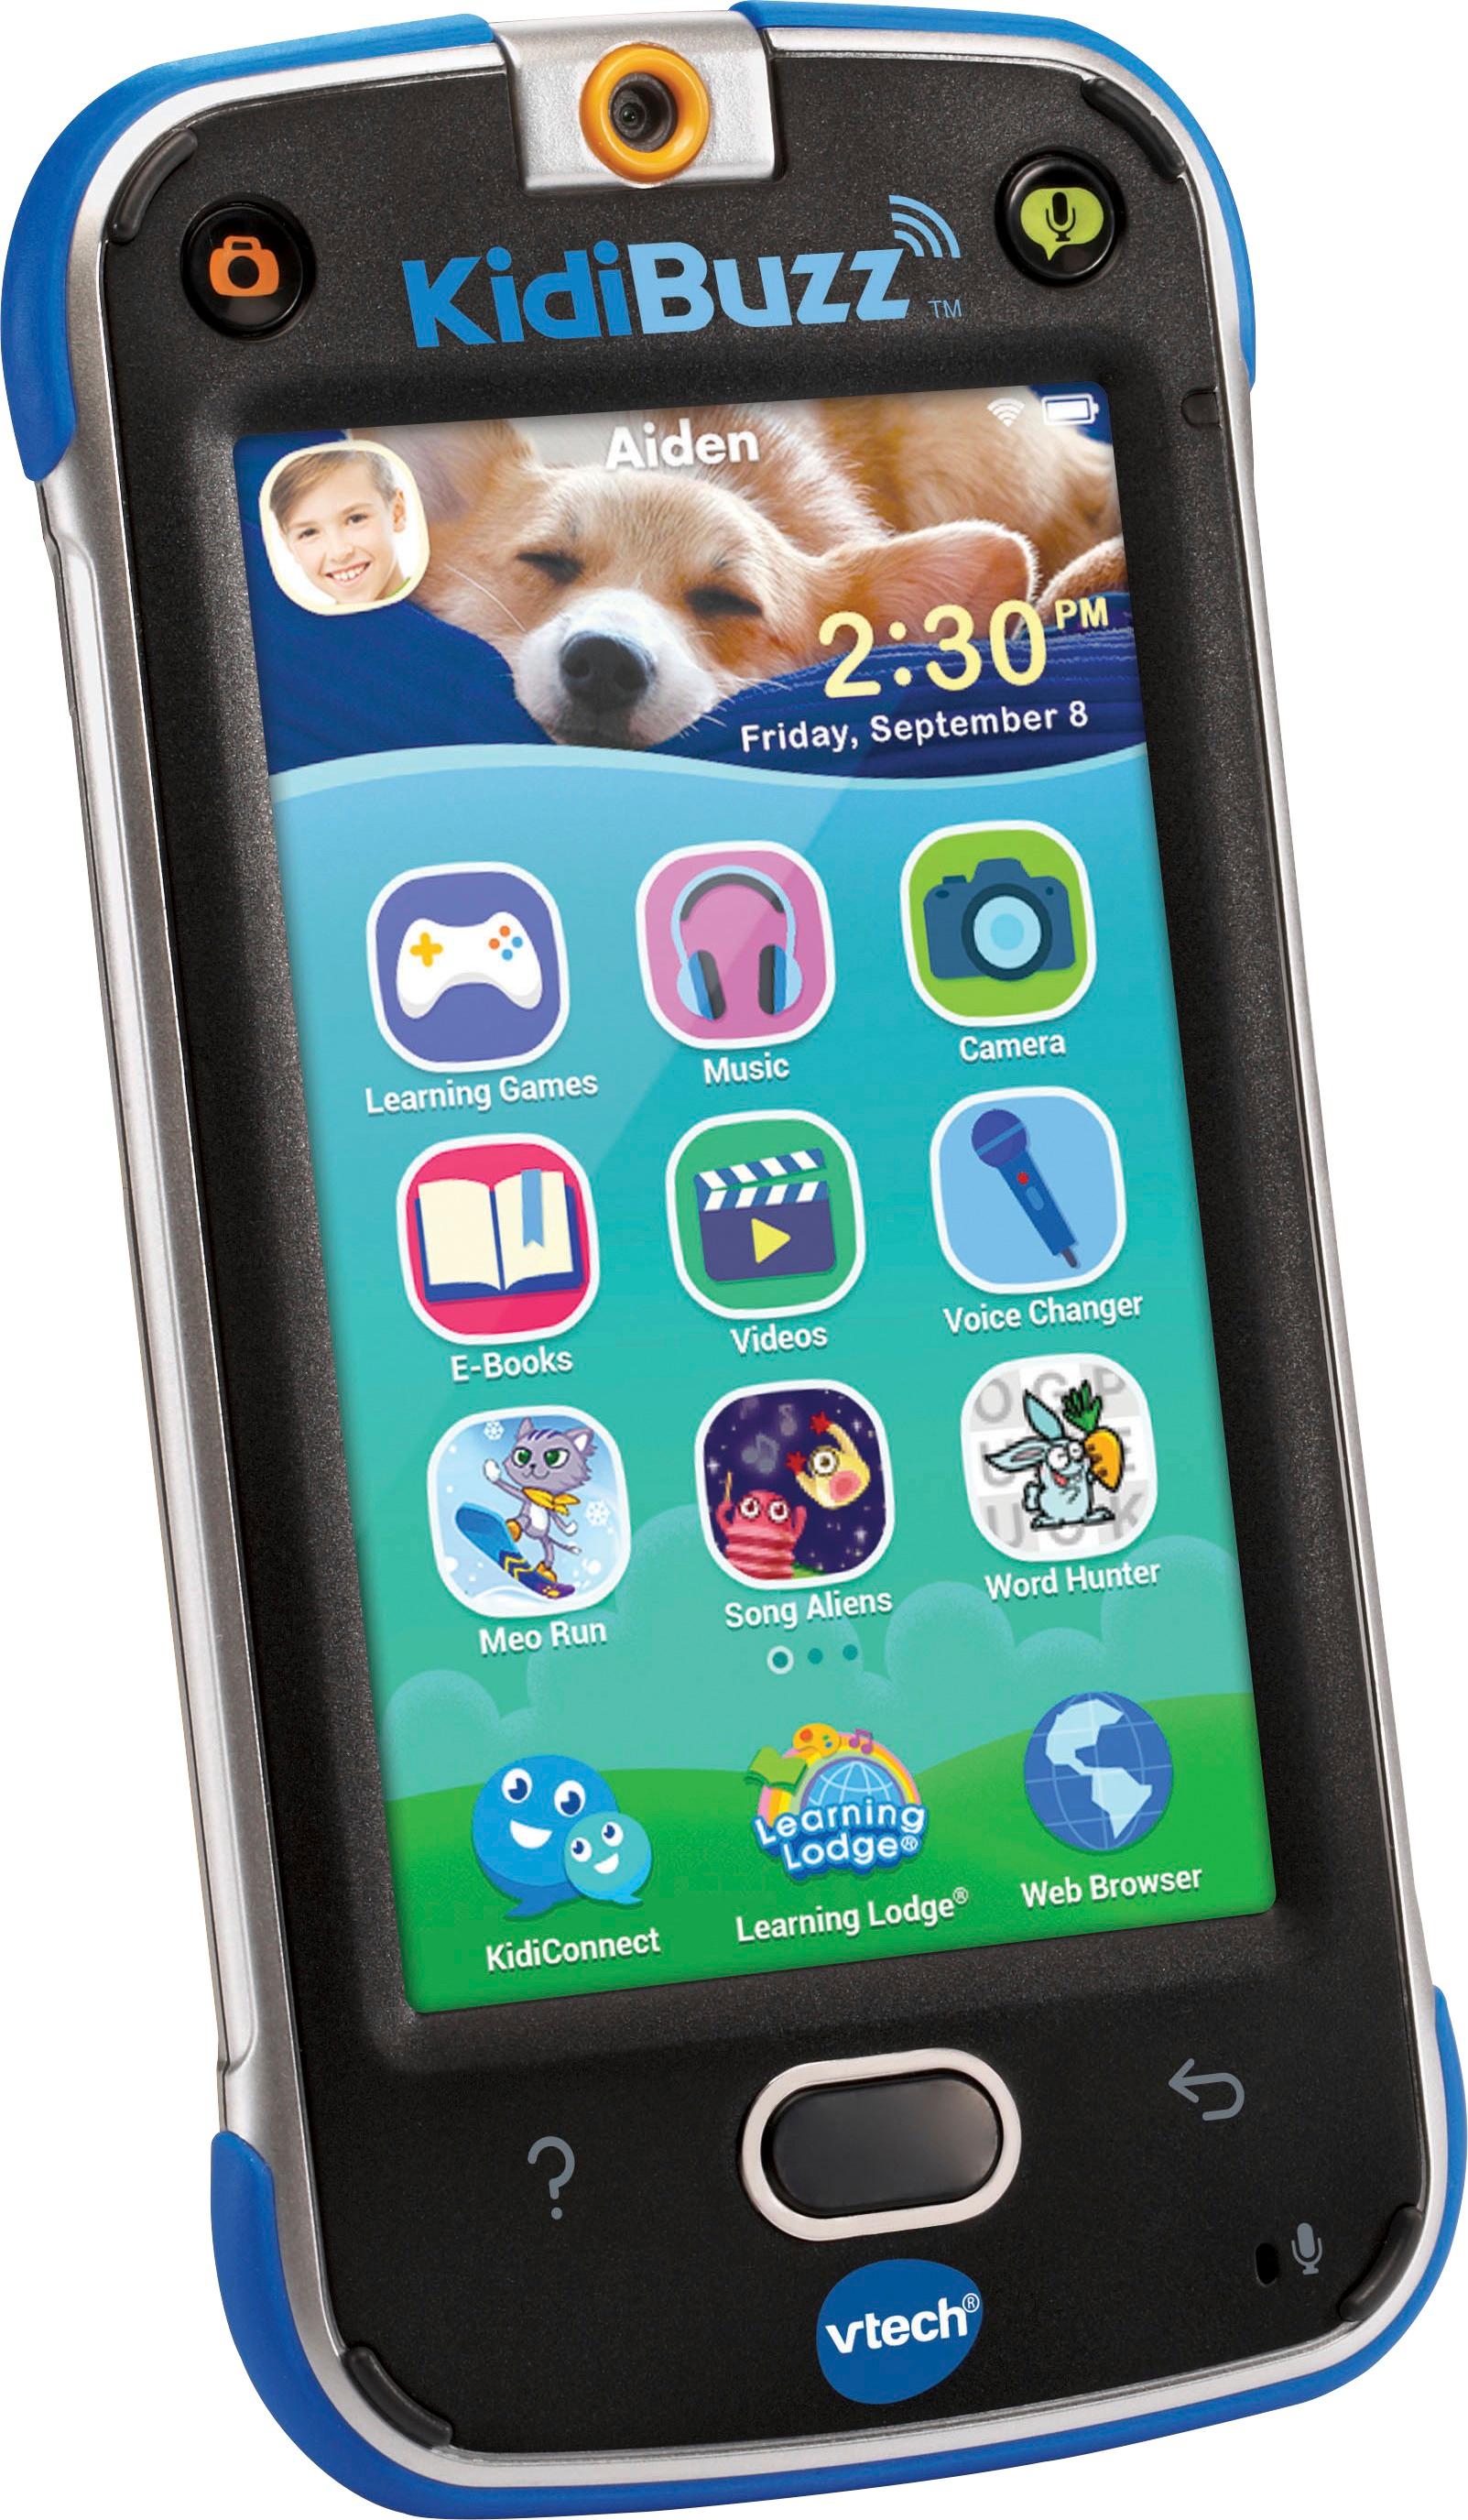 80-169500 Box Damage VTech KidiBuzz Smart Device Phone for Kids 1695 Black Blue 